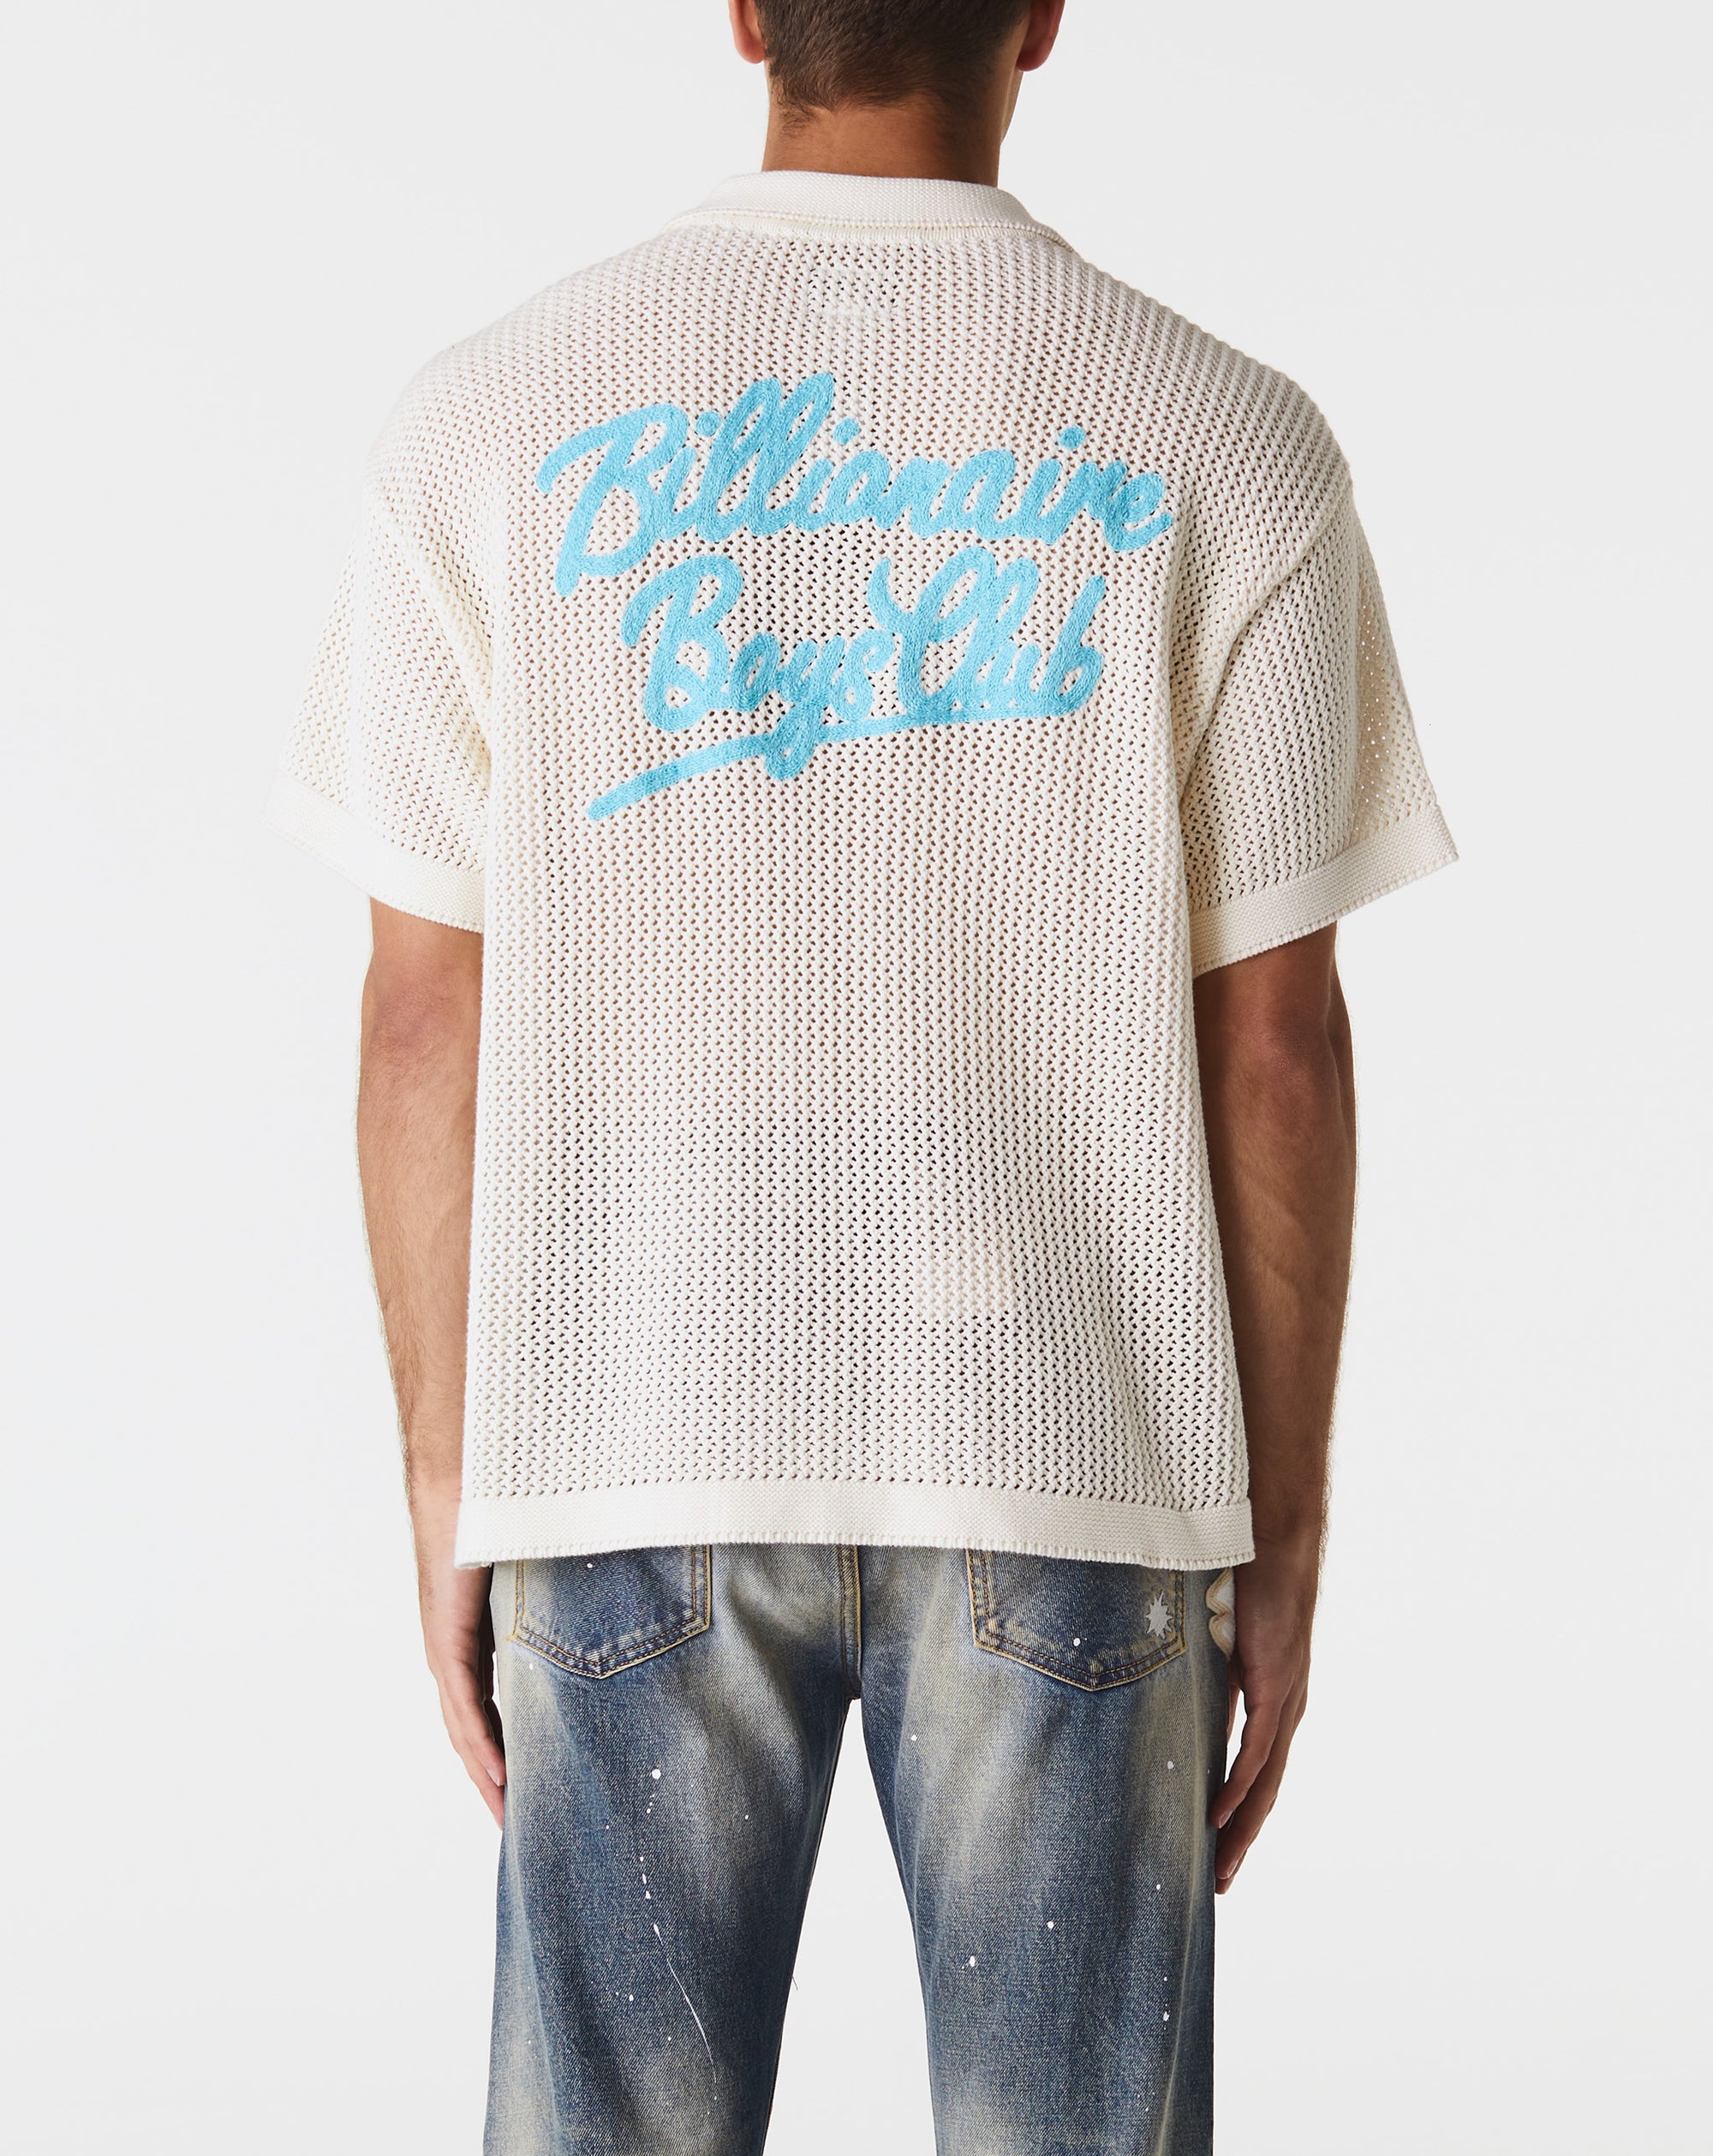 Billionaire Boys Club BB Mingos Crochet Knit Camp Shirt - Rule of Next Apparel